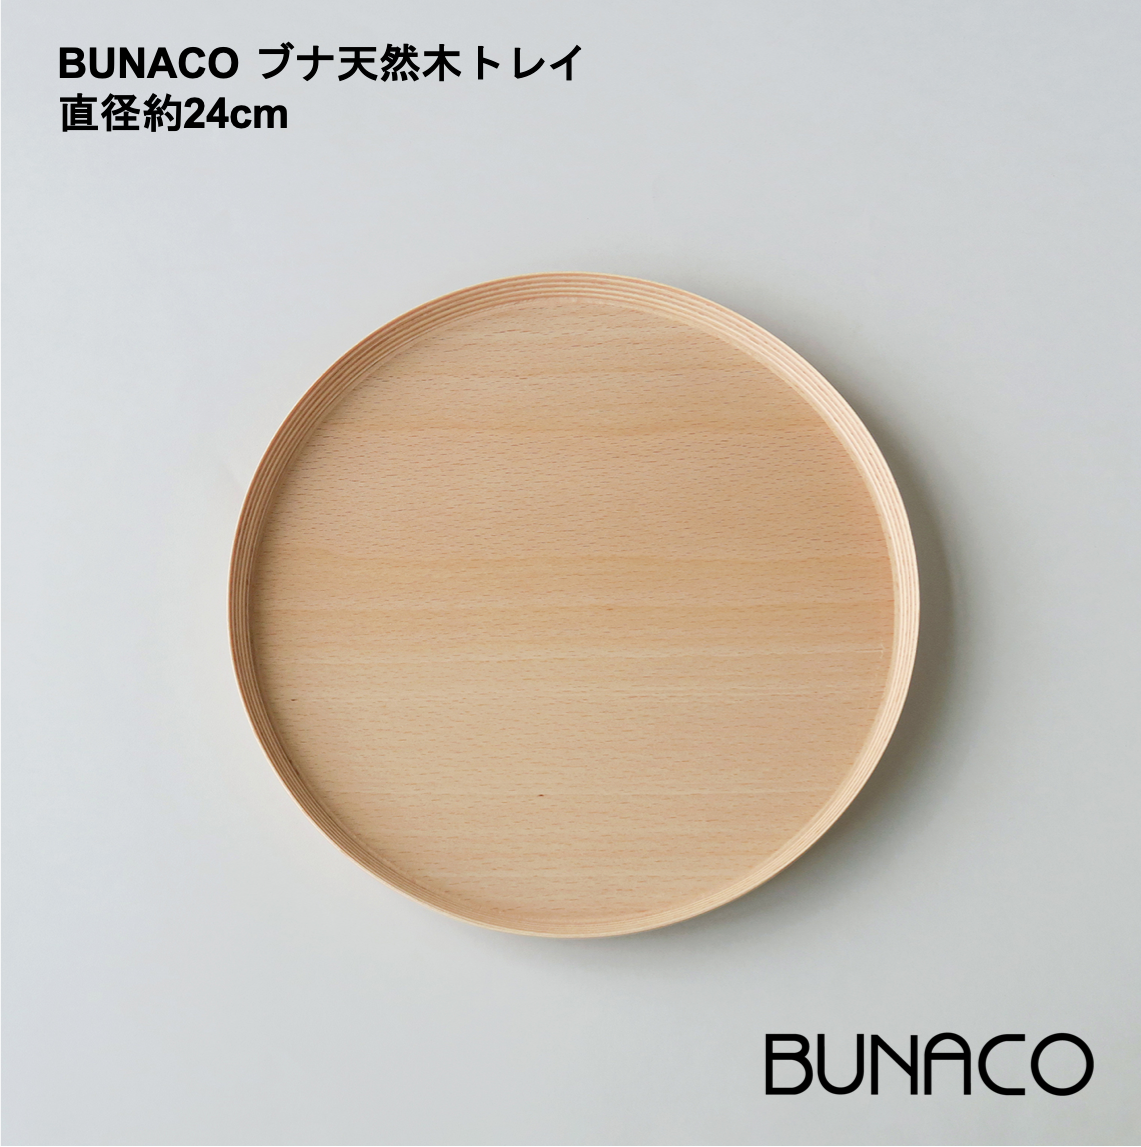 BUNACO ブナ天然木トレイ 直径約24cm | Giftpad egift